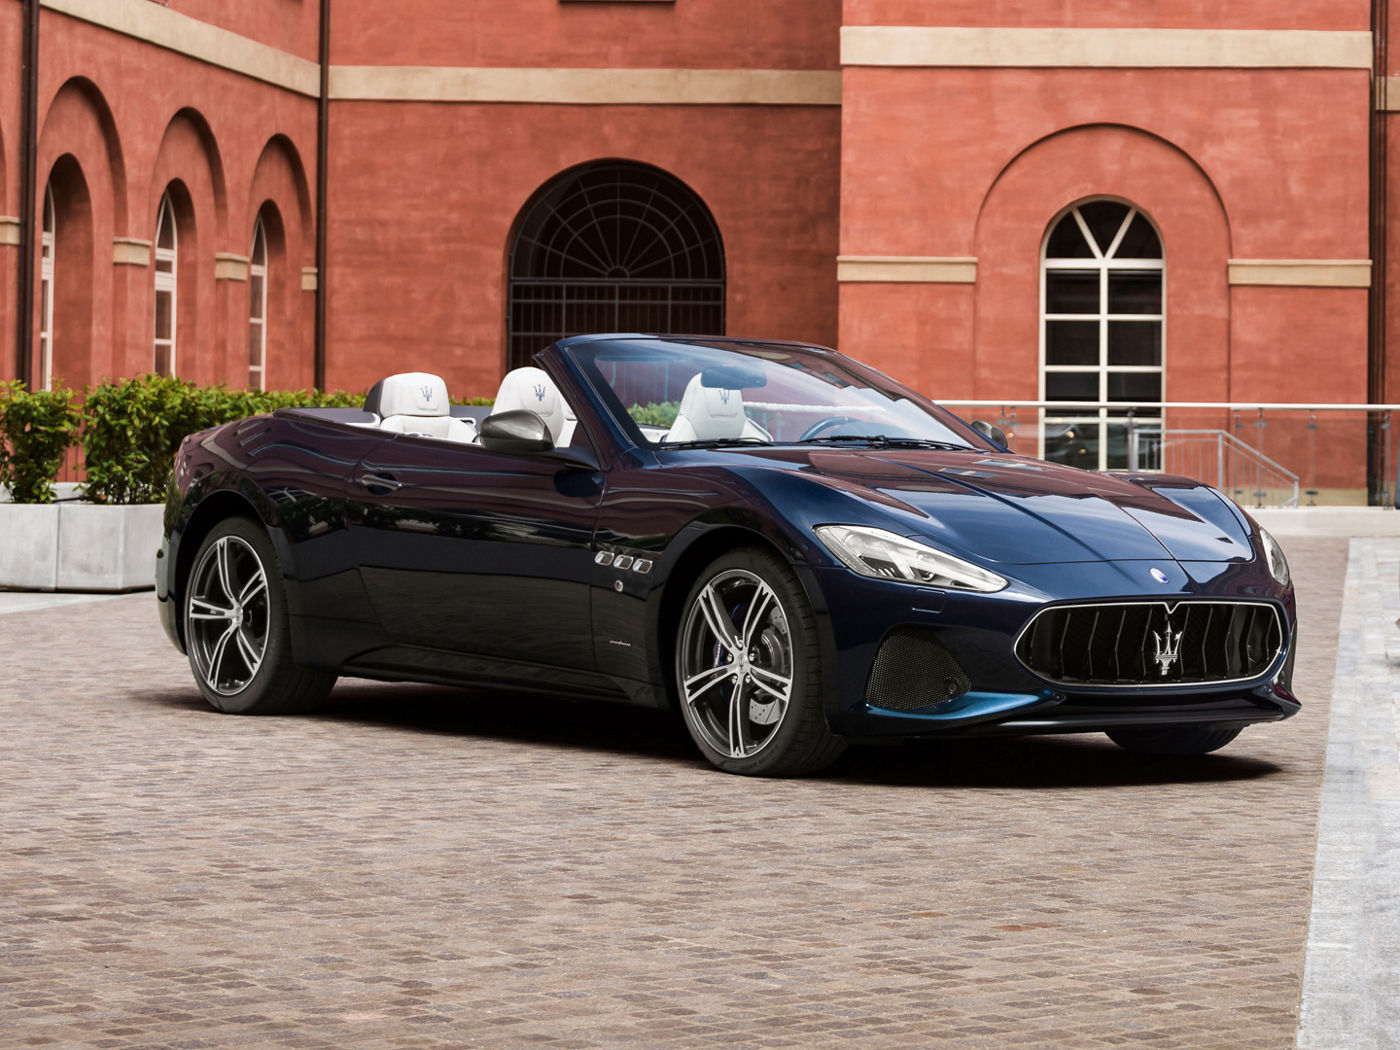 Black Maserati GranCabrio parked in front of building